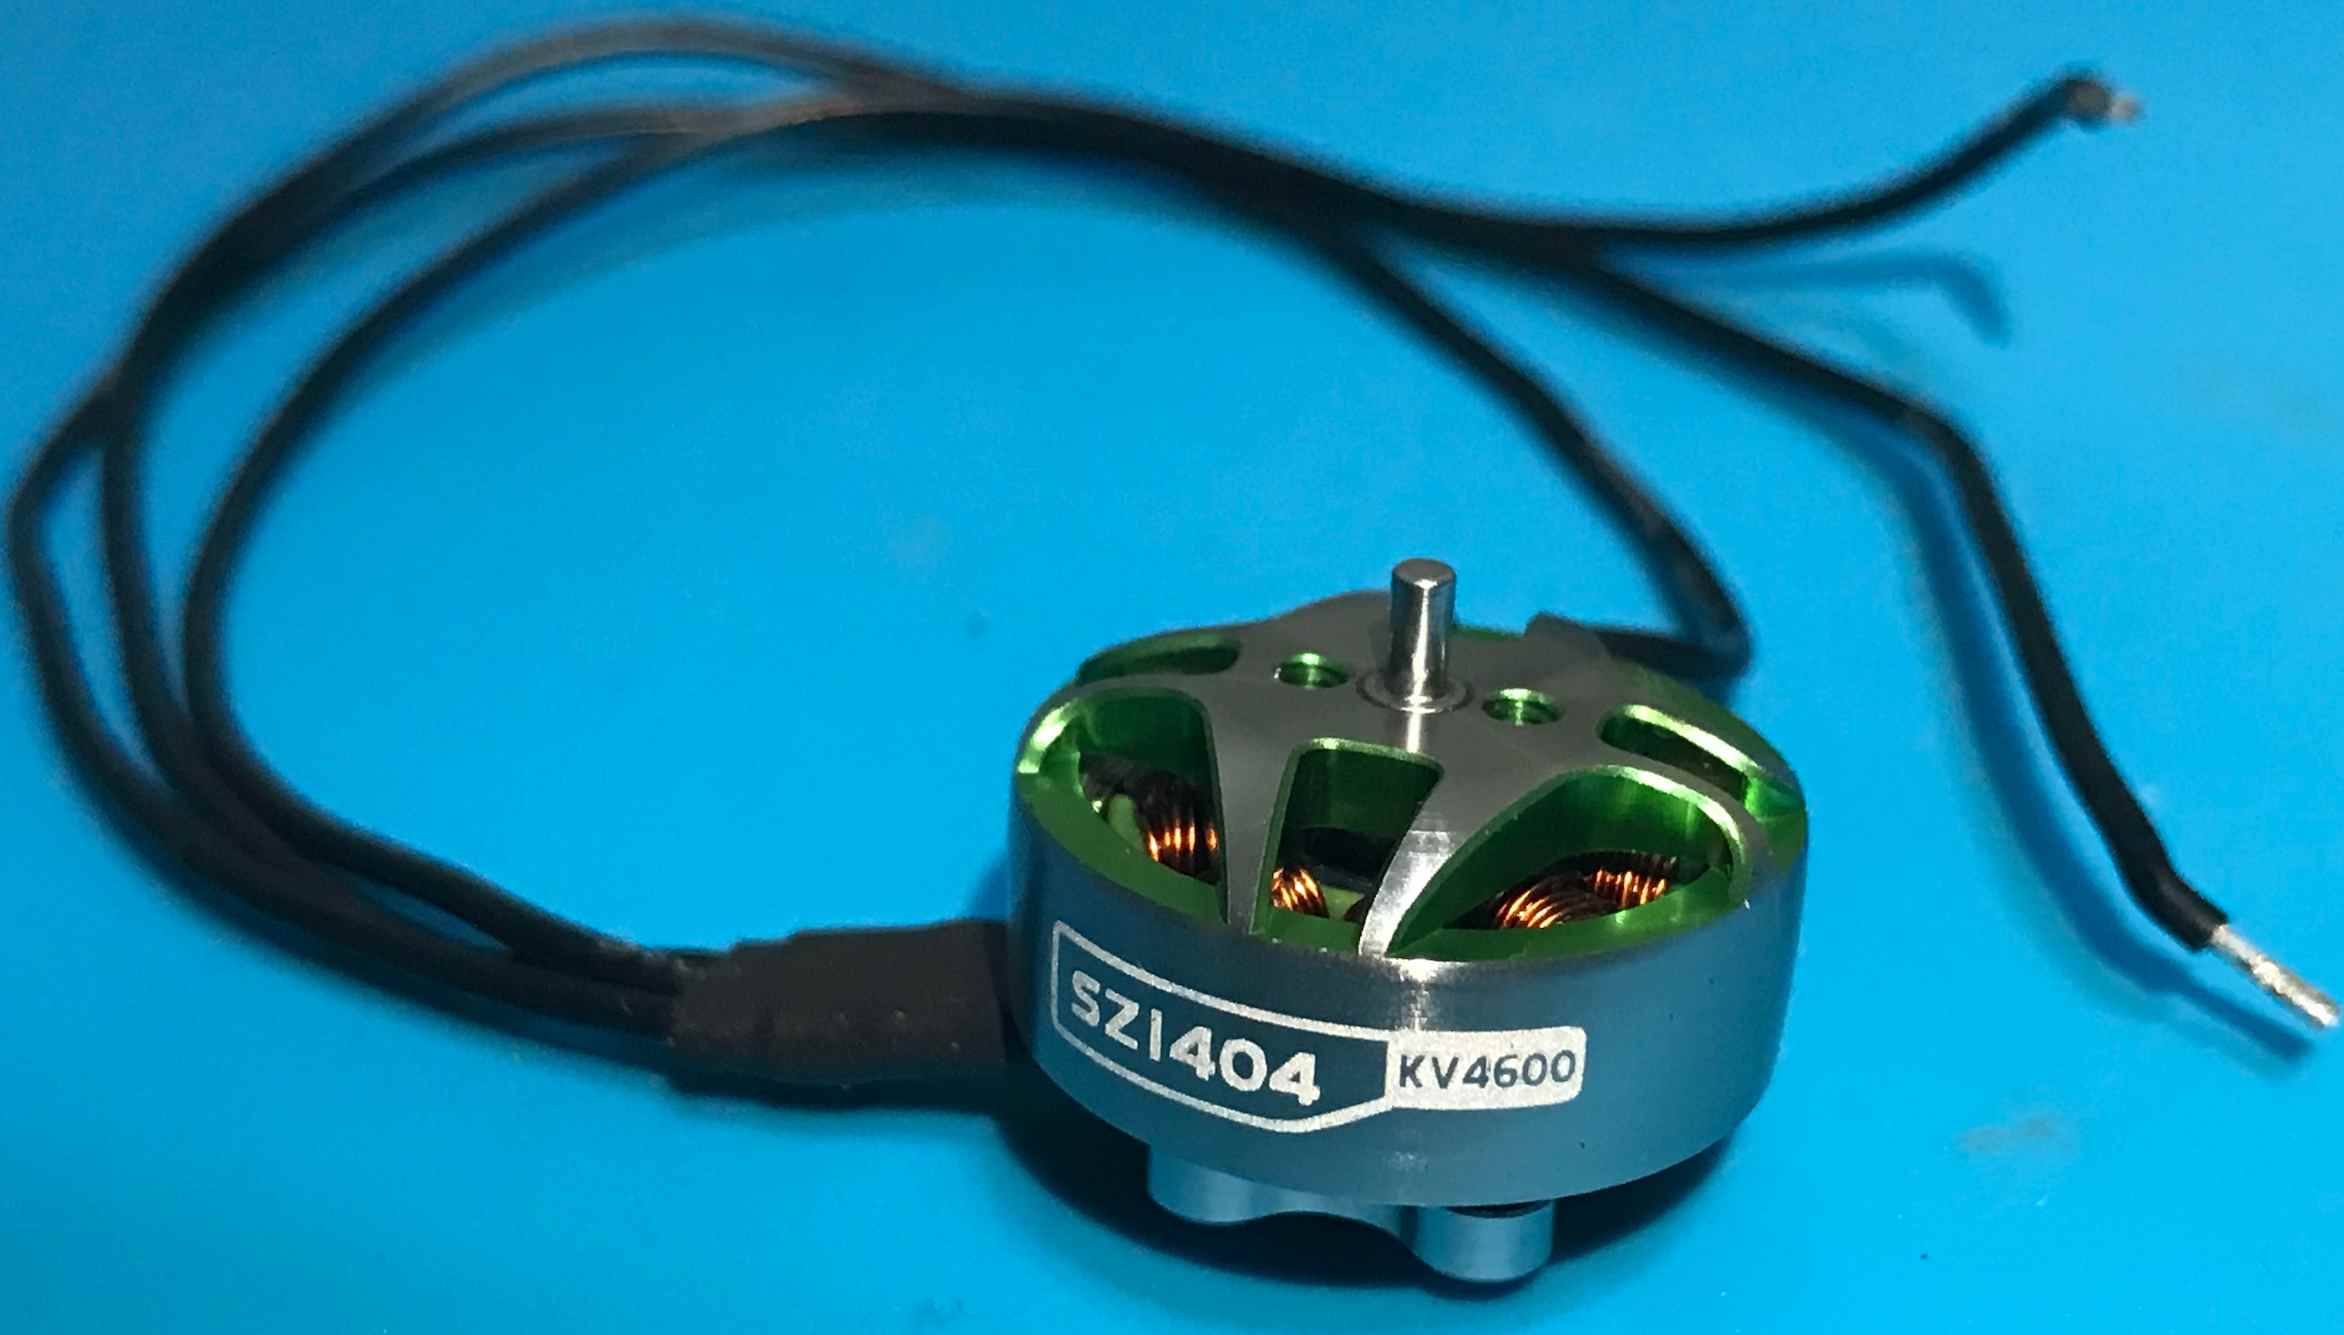 MEPS SZ 1404 motors for FPV drone
